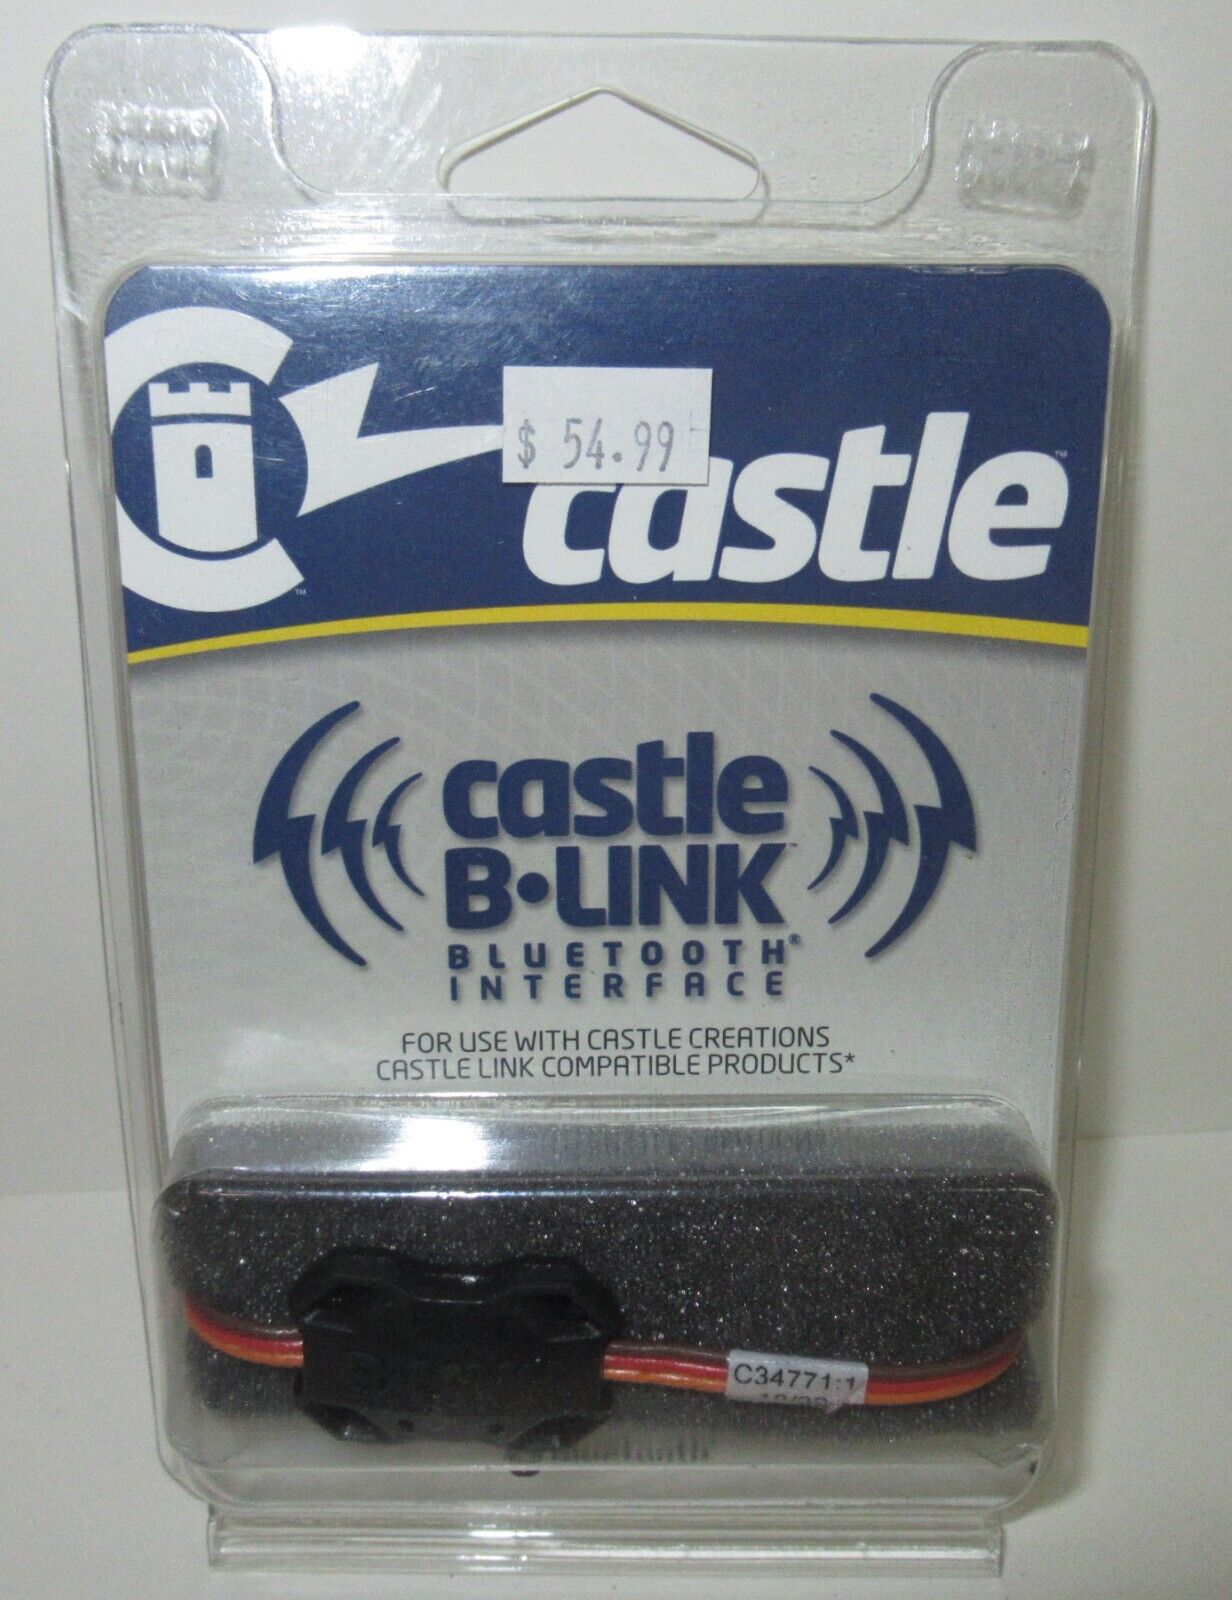 Castle B-Link Bluetooth Interface Adapter #011-0135-00